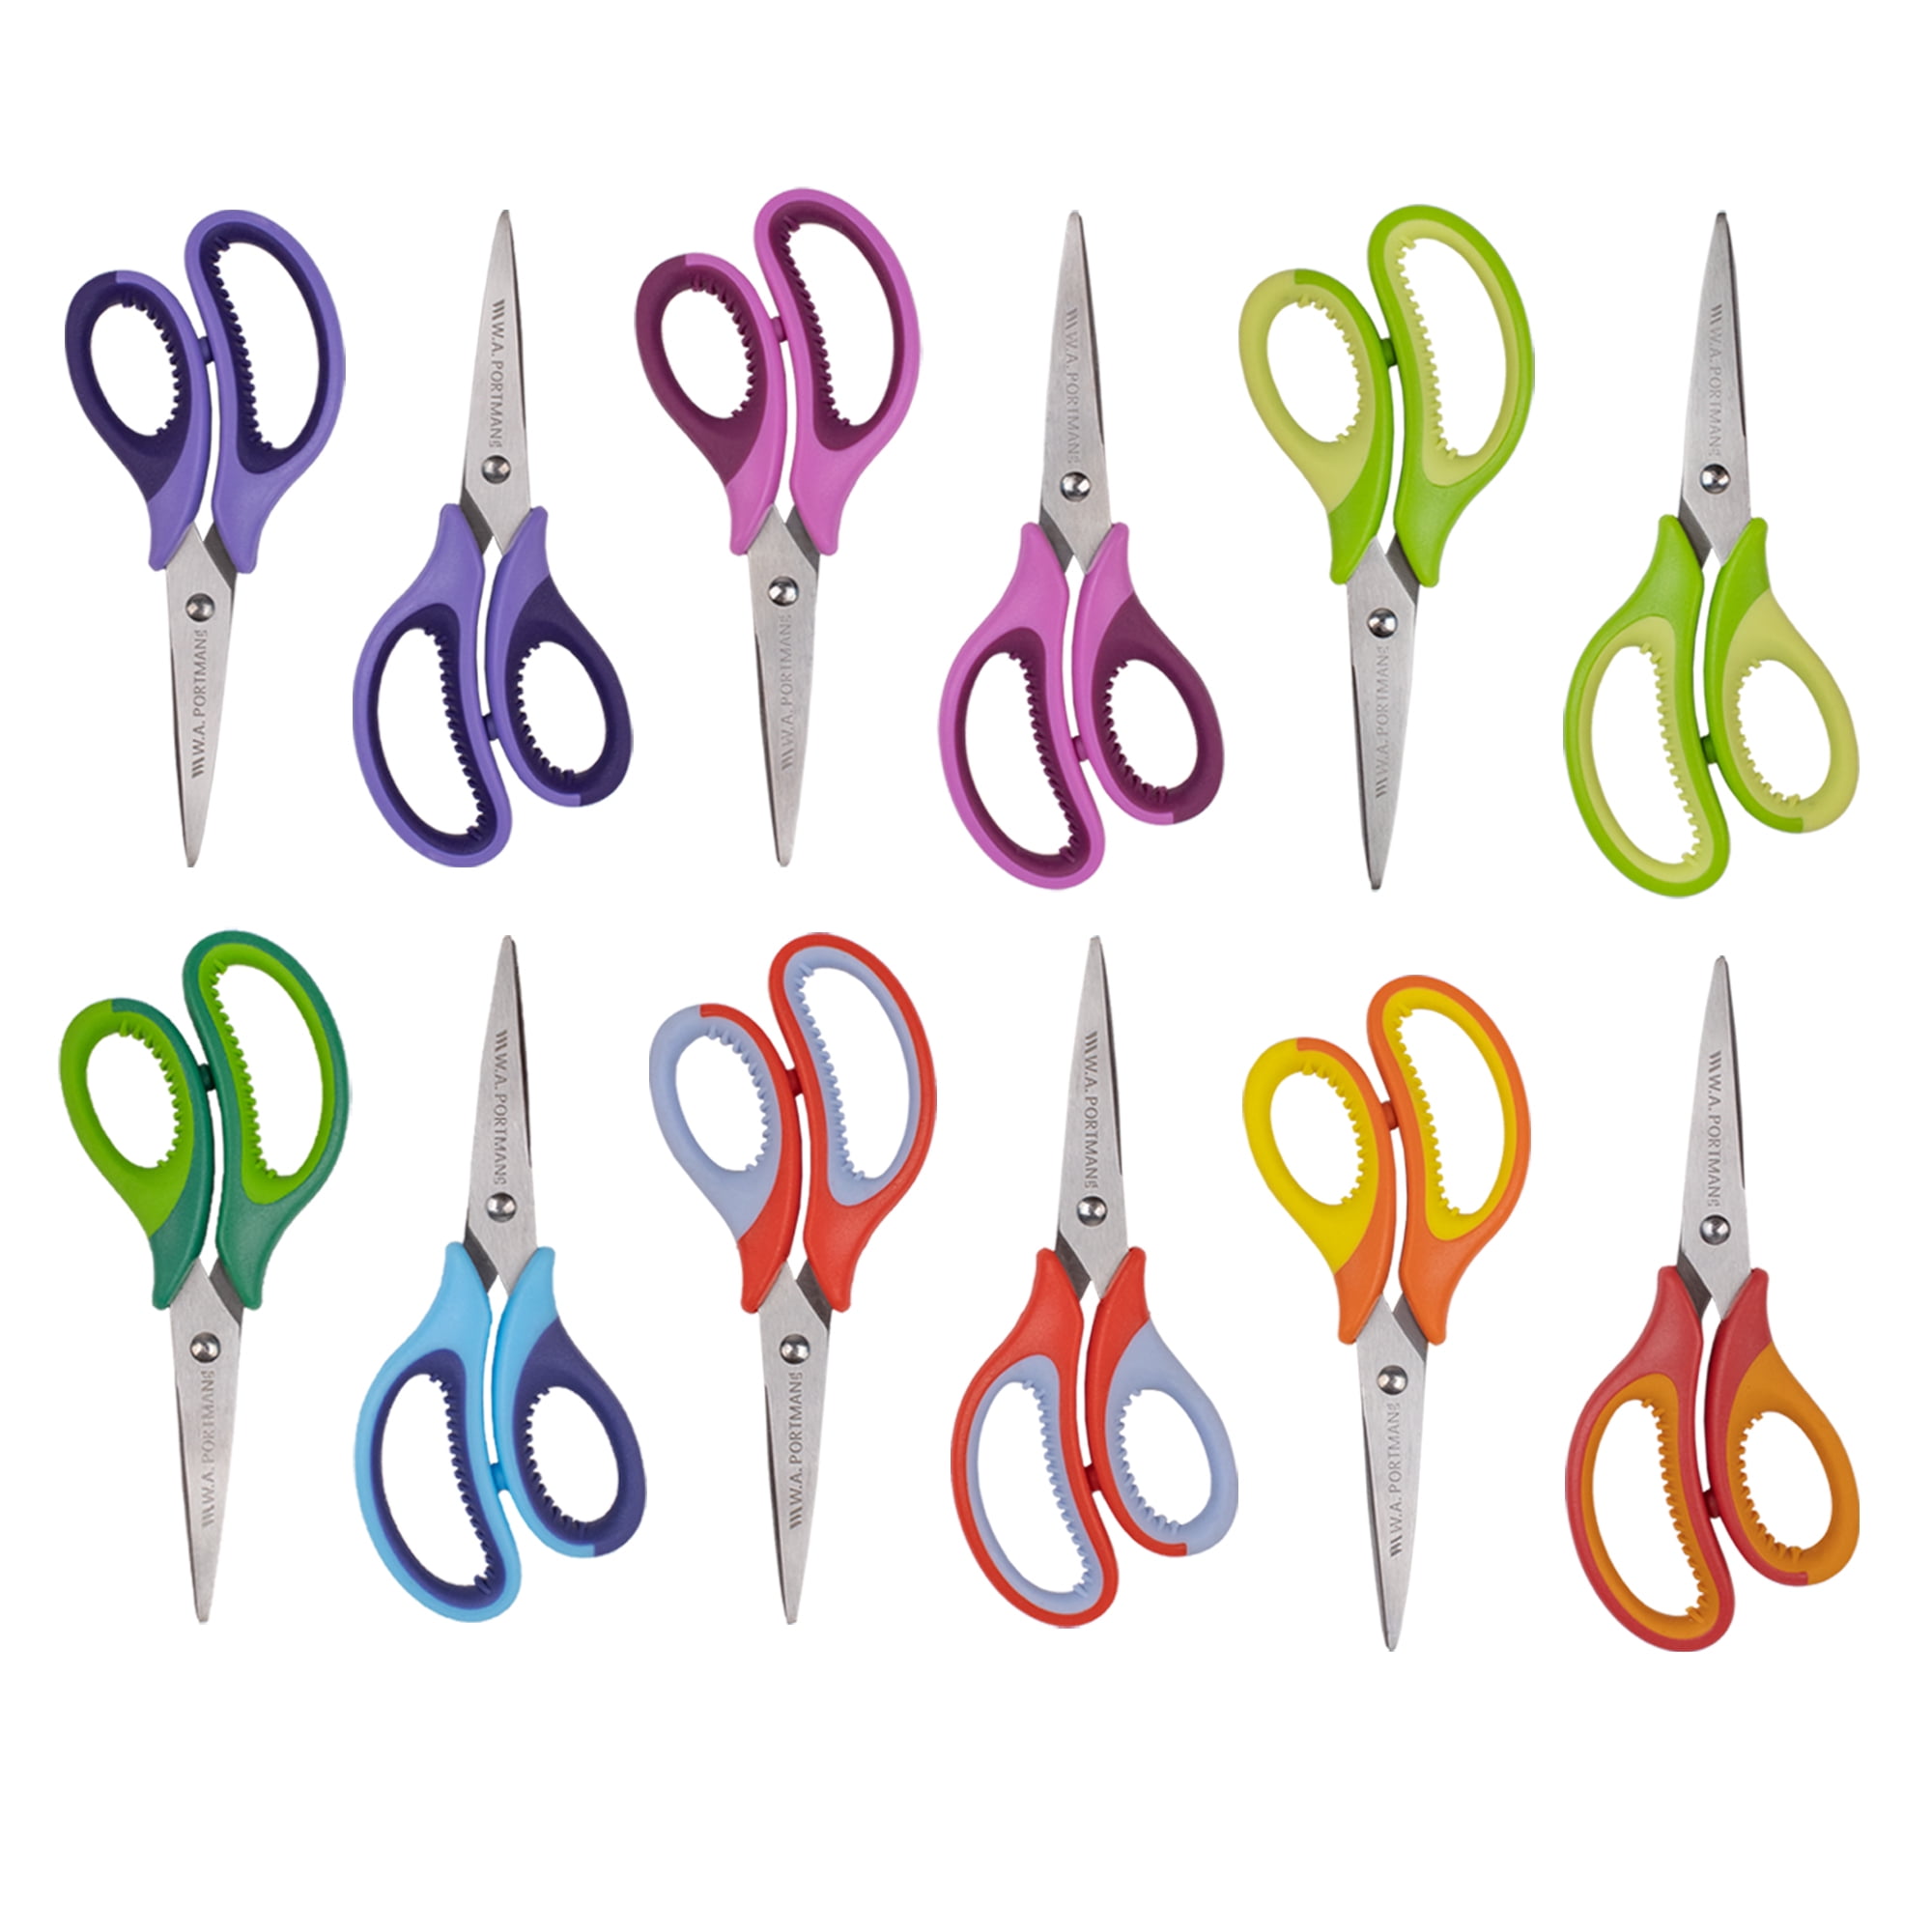 Wa Portman Kids Scissors, Pointed Tip, 6 Pack of Scissors